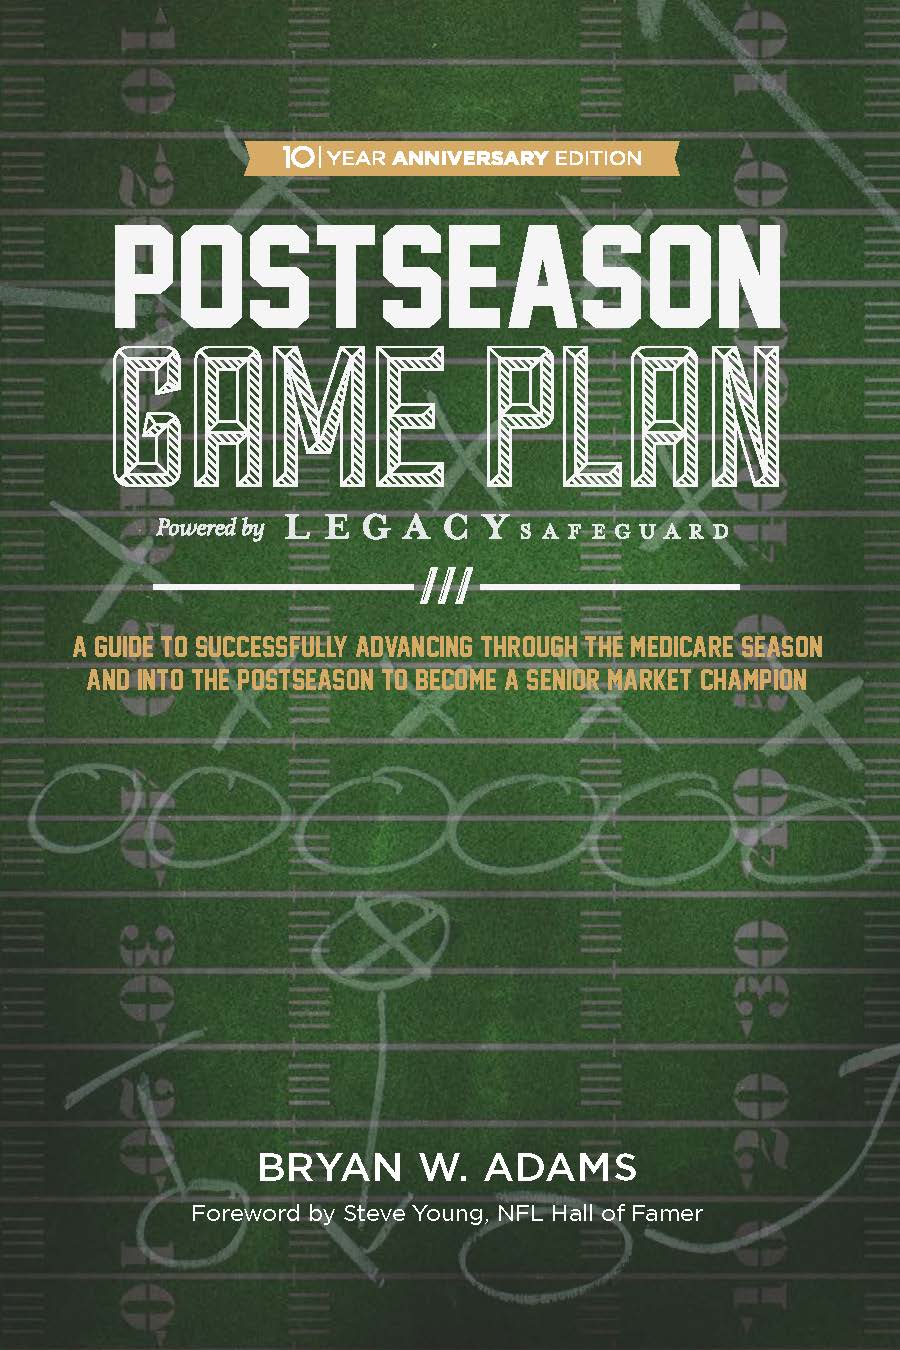 Postseason Game Plan Book Cover